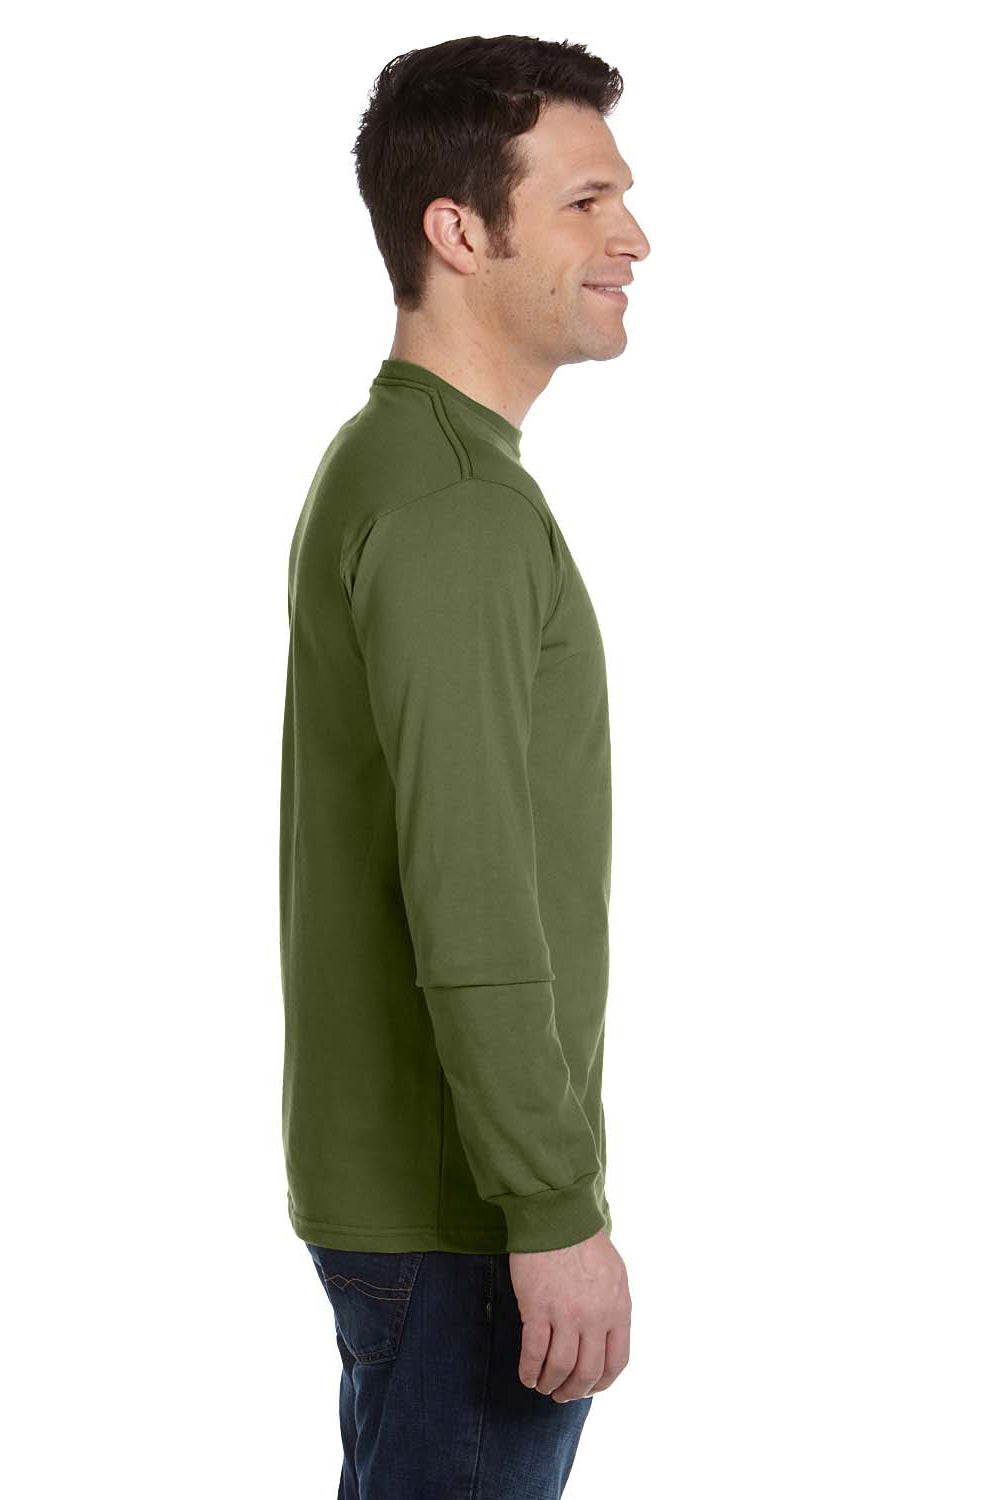 Econscious EC1500 Mens Long Sleeve Crewneck T-Shirt Olive Green Side